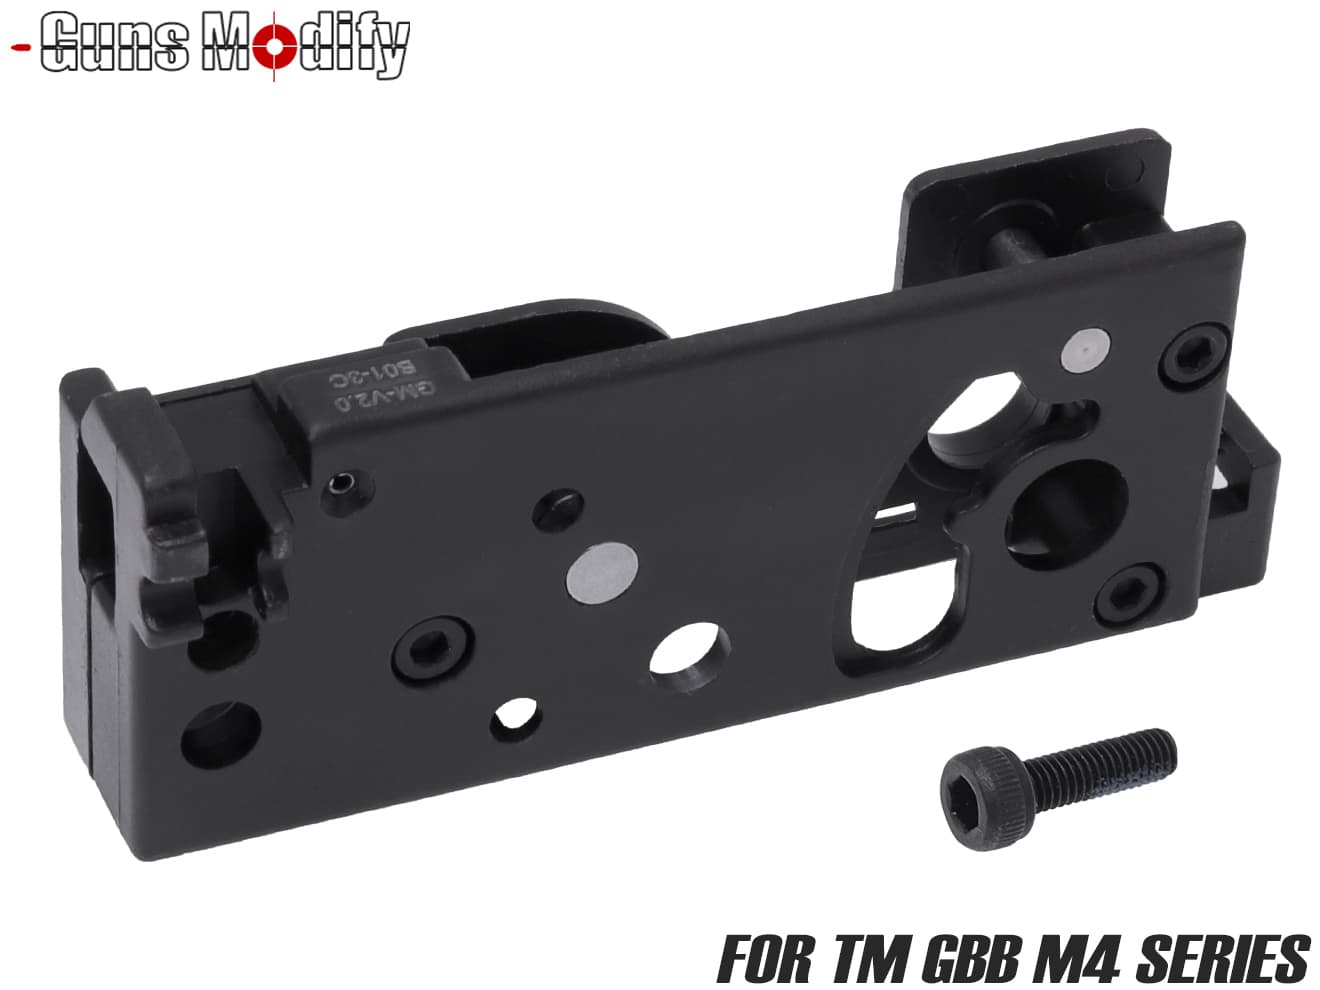 Guns Modify 亜鉛ダイキャスト カスタムトリガーボックス for TM GBB M4◆ロワー 固定ステー 配置 左ケース ステー厚み 増加 強度 アップ リペア 強化パーツ